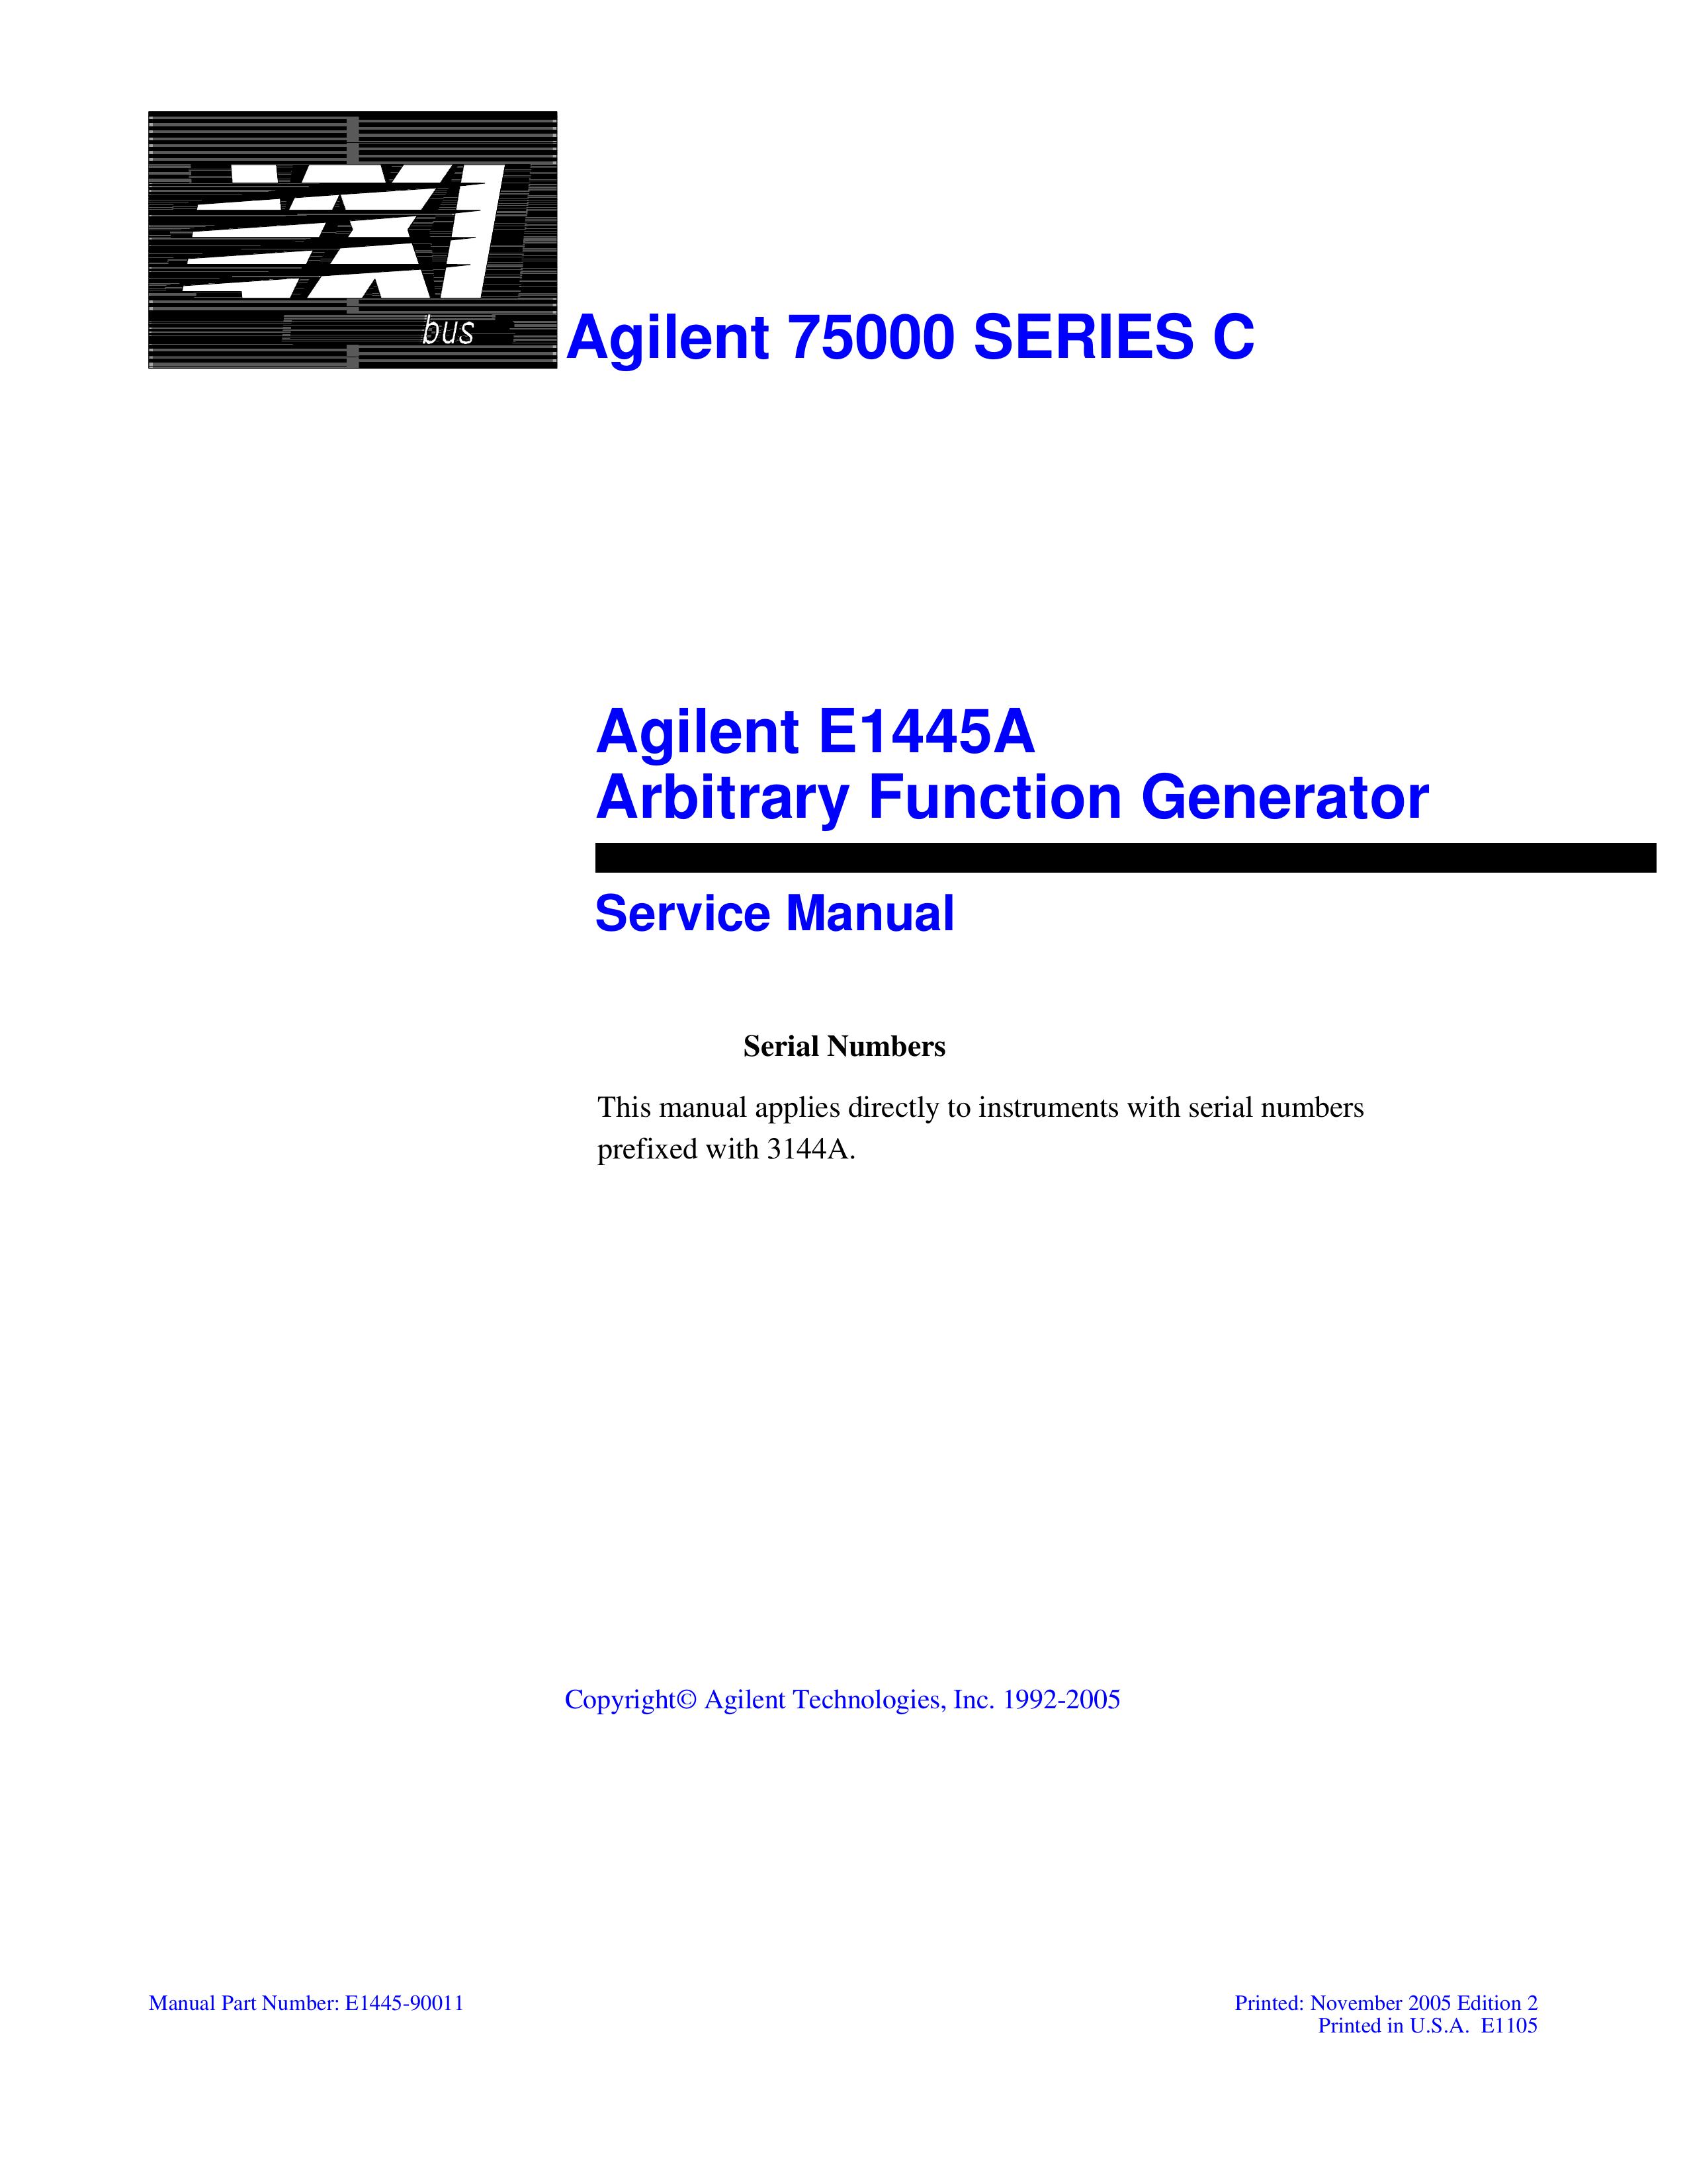 Agilent Technologies 75000 Series C Portable Generator User Manual